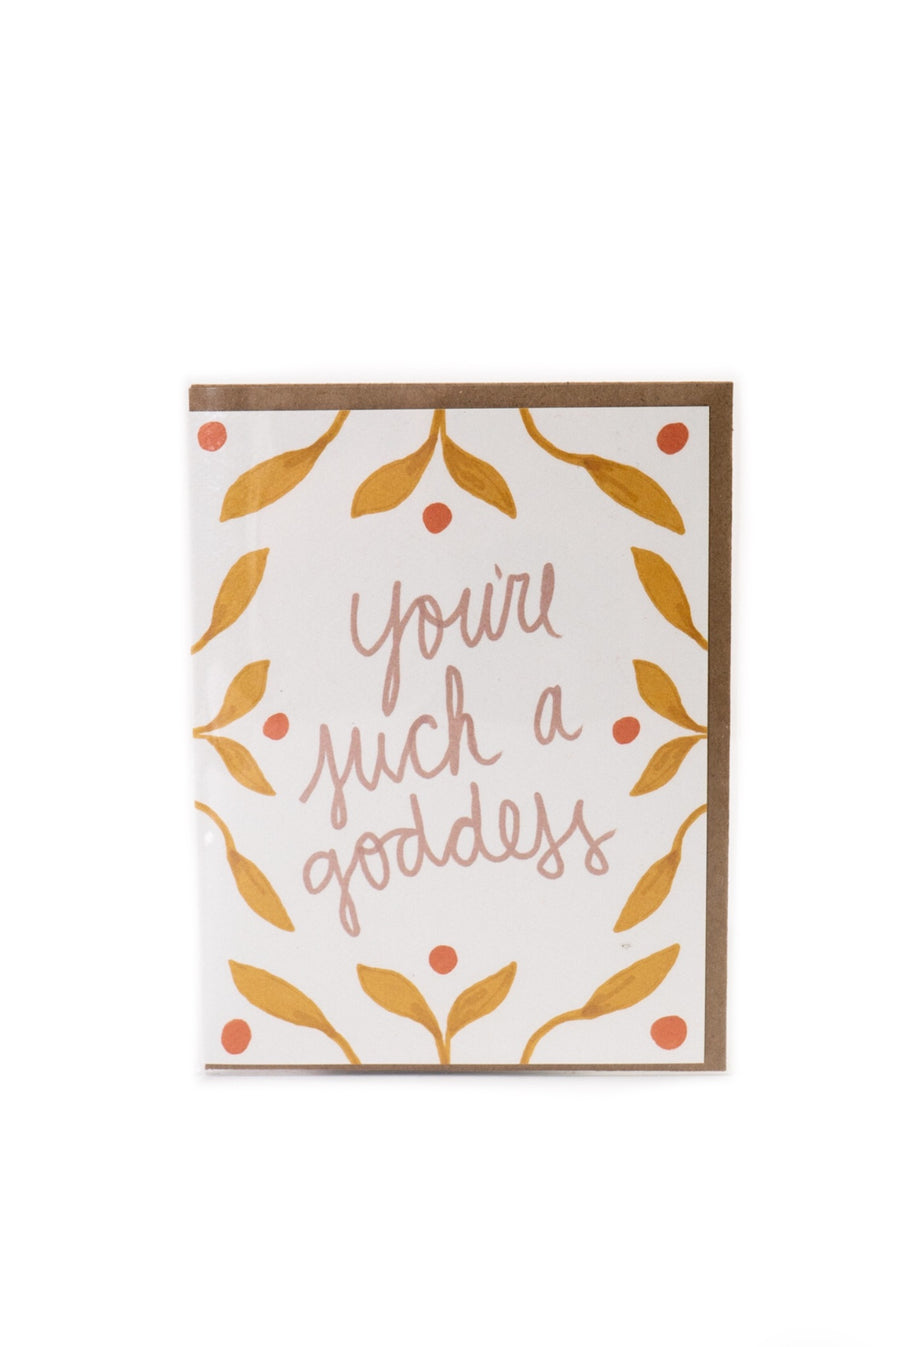 You're Such a Goddess Card by Maija Rebecca